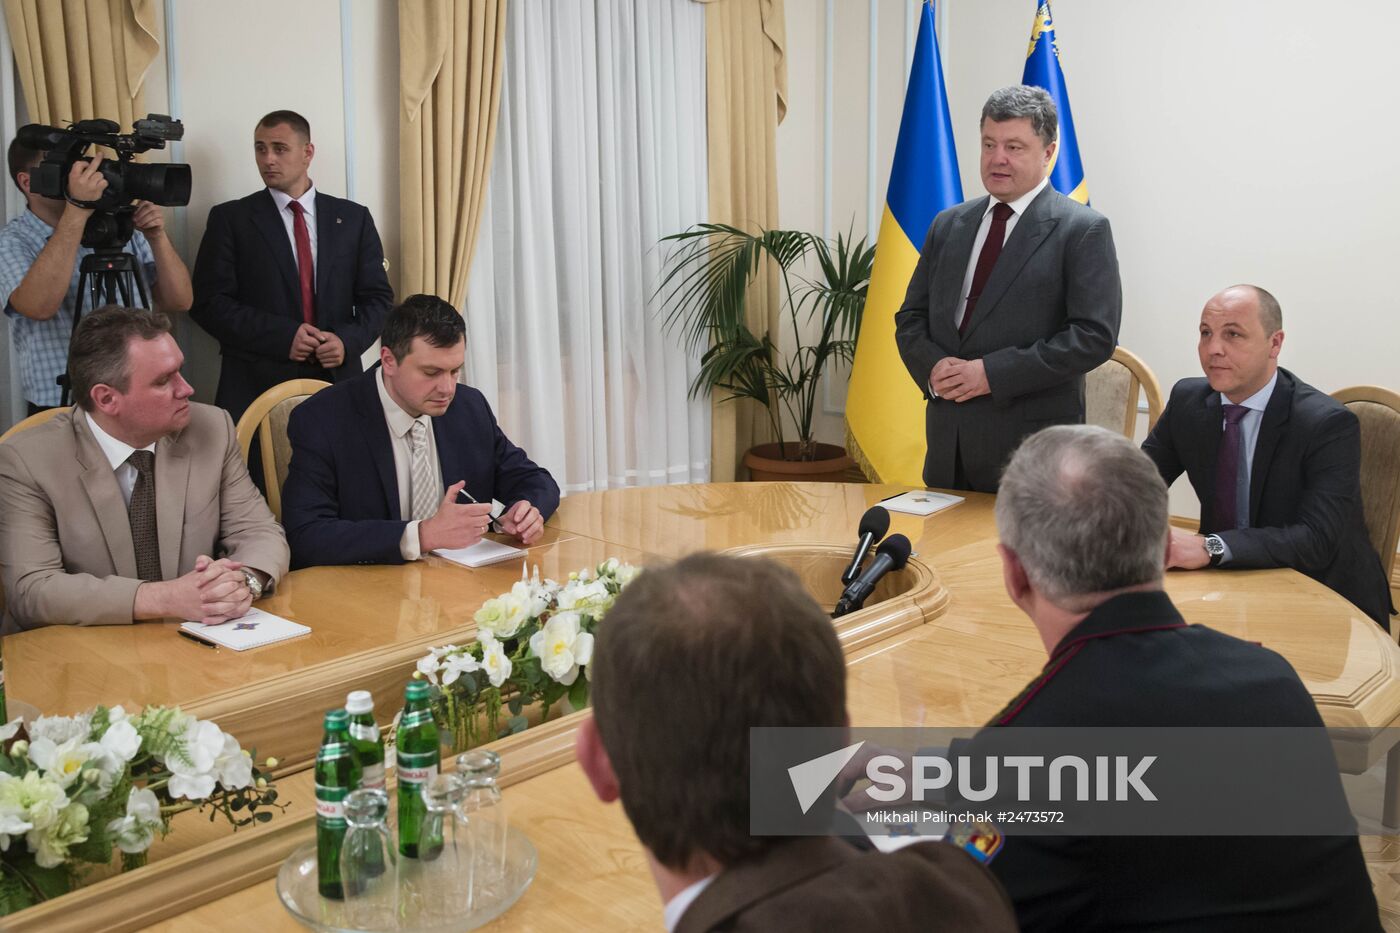 President Poroshenko accepts Parubiy's resignation from his position